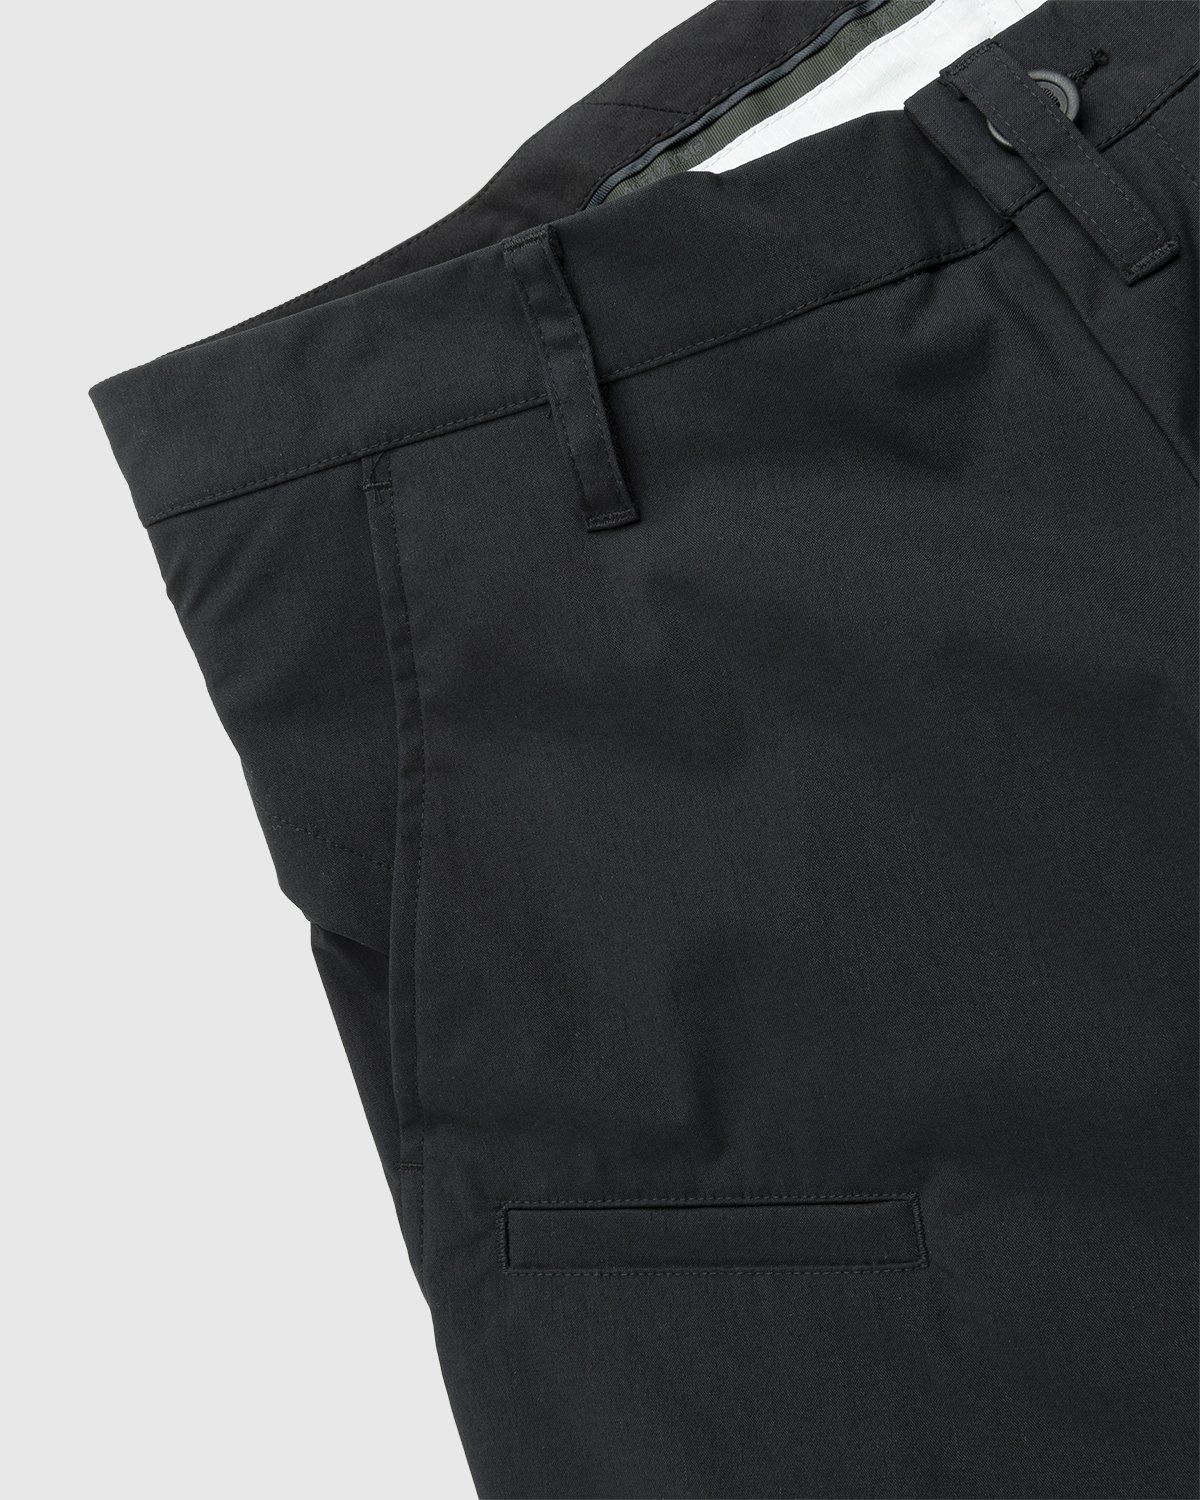 ACRONYM – P10-E Pant Black - Cargo Pants - Black - Image 7